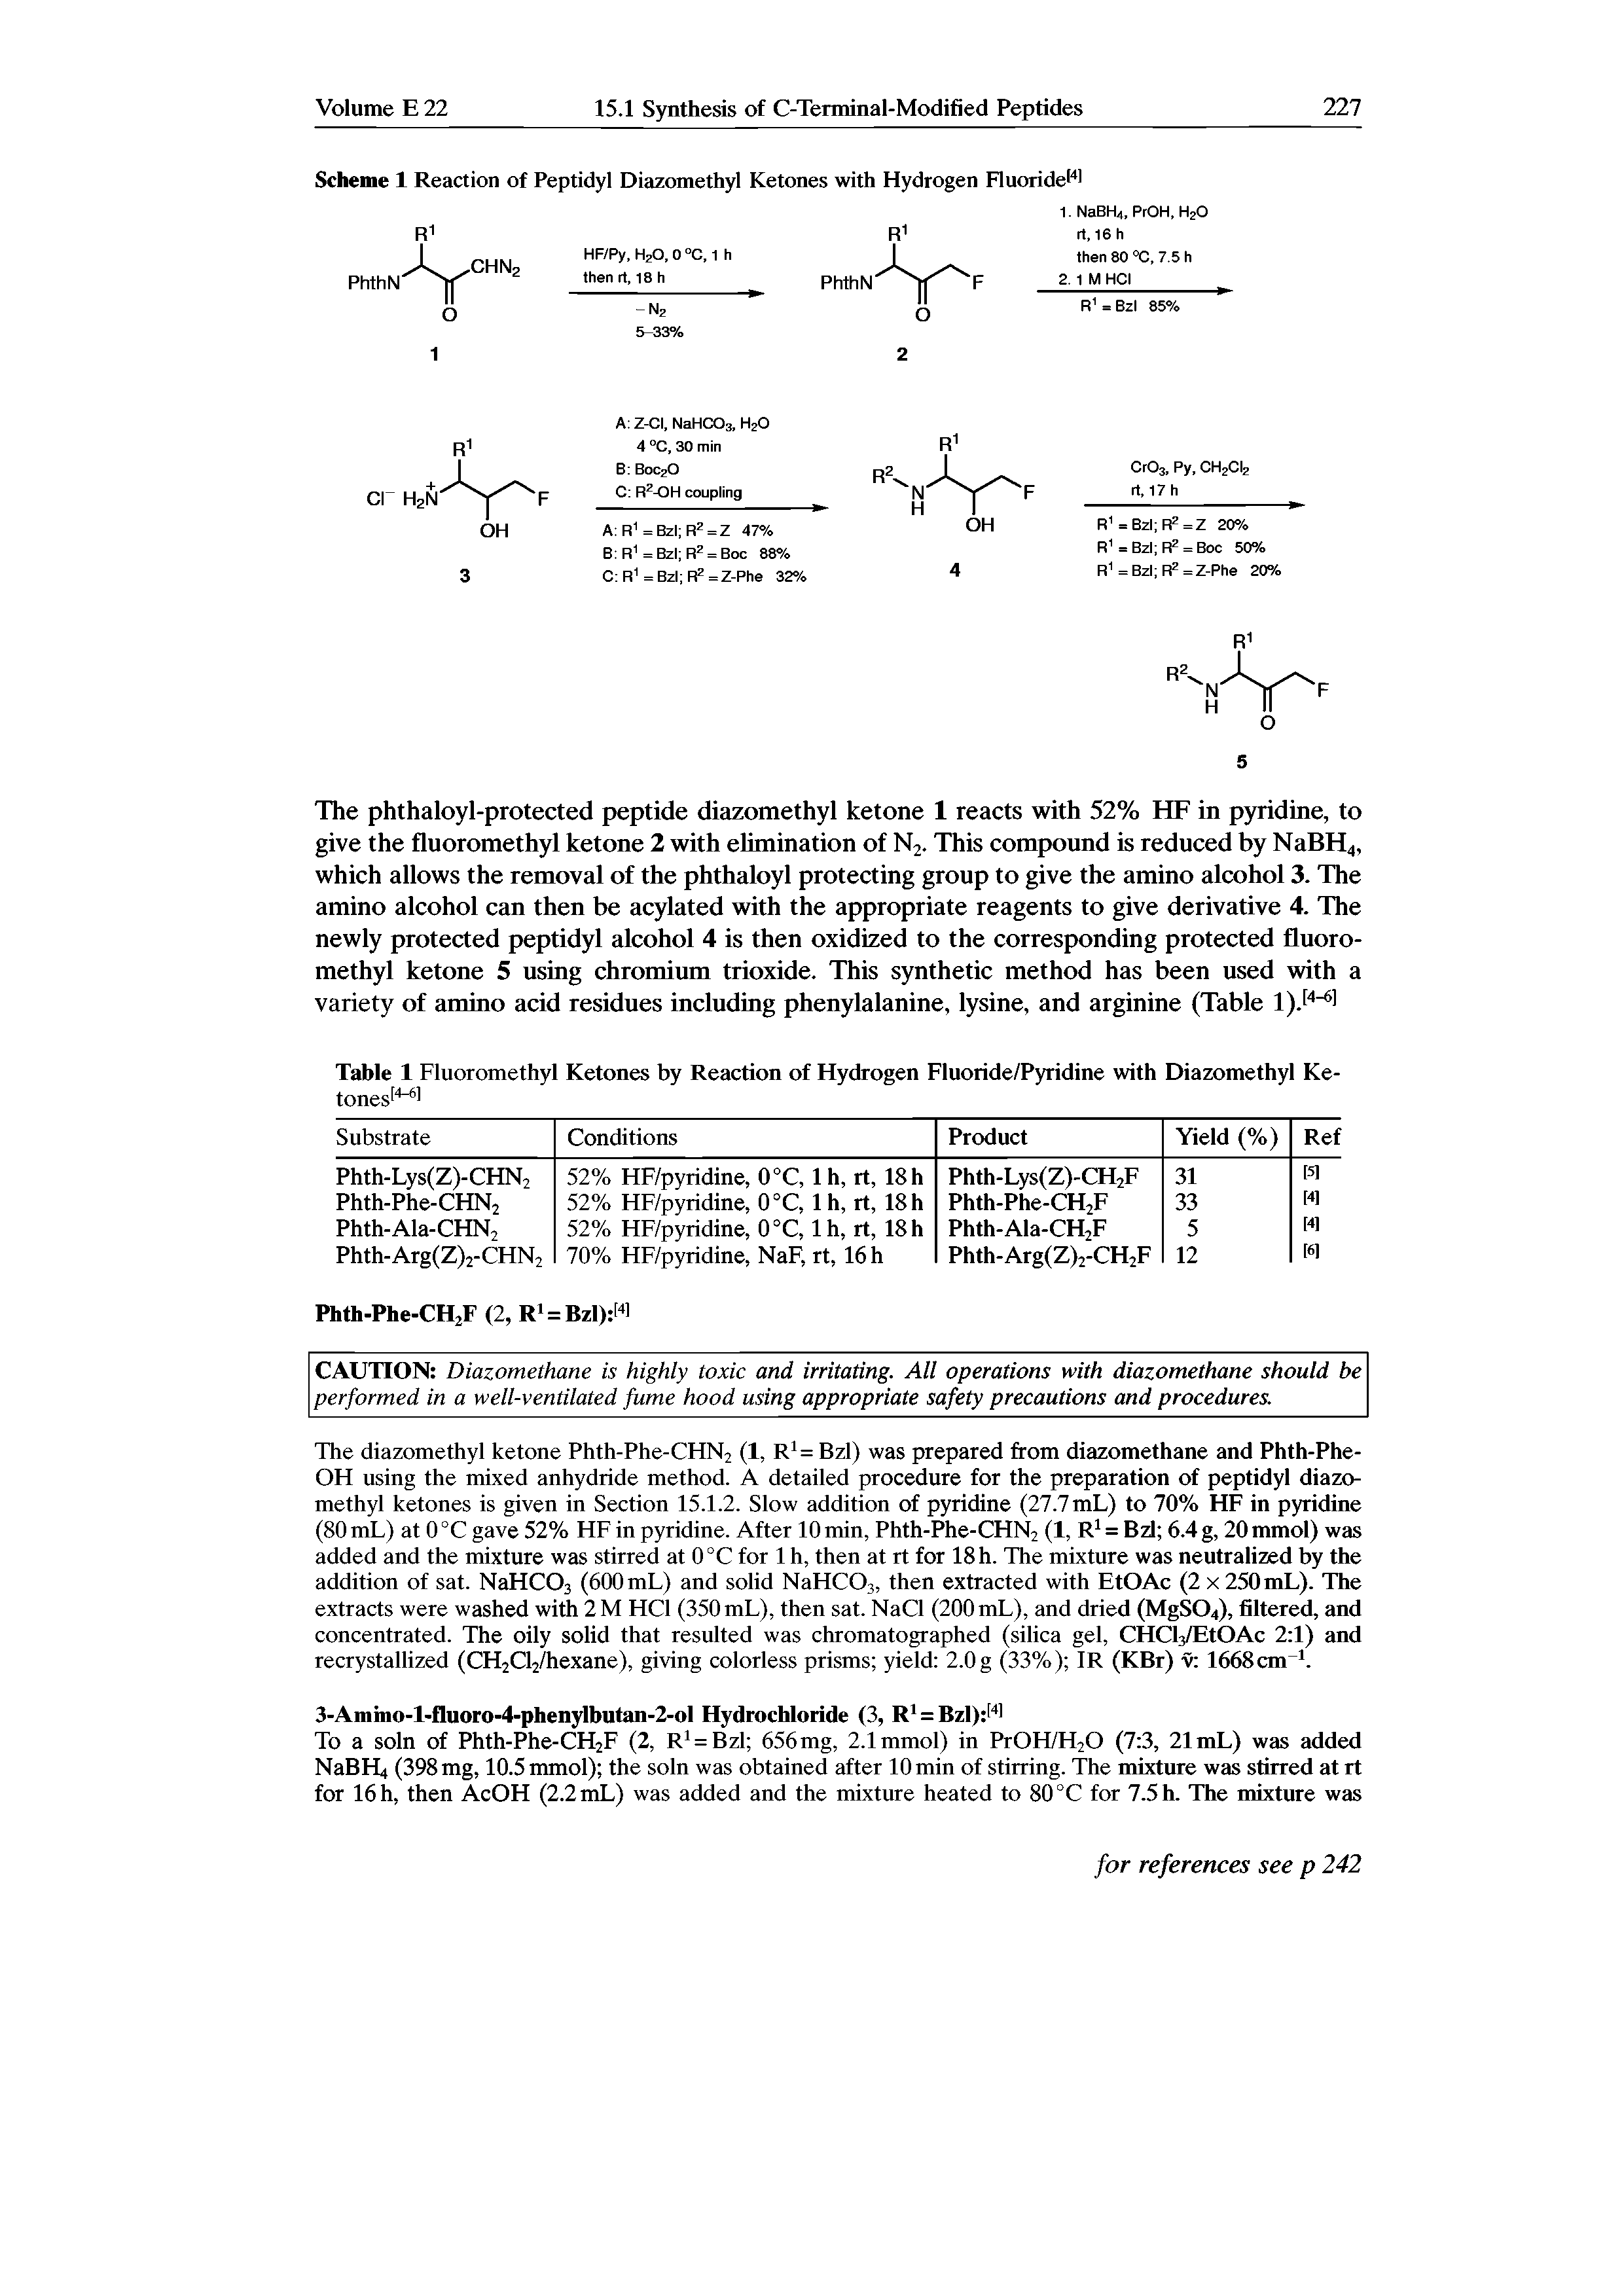 Table 1 Fluoromethyl Ketones by Reaction of Hydrogen Fluoride/Pyridine with Diazomethyl Ketones1 44 1...